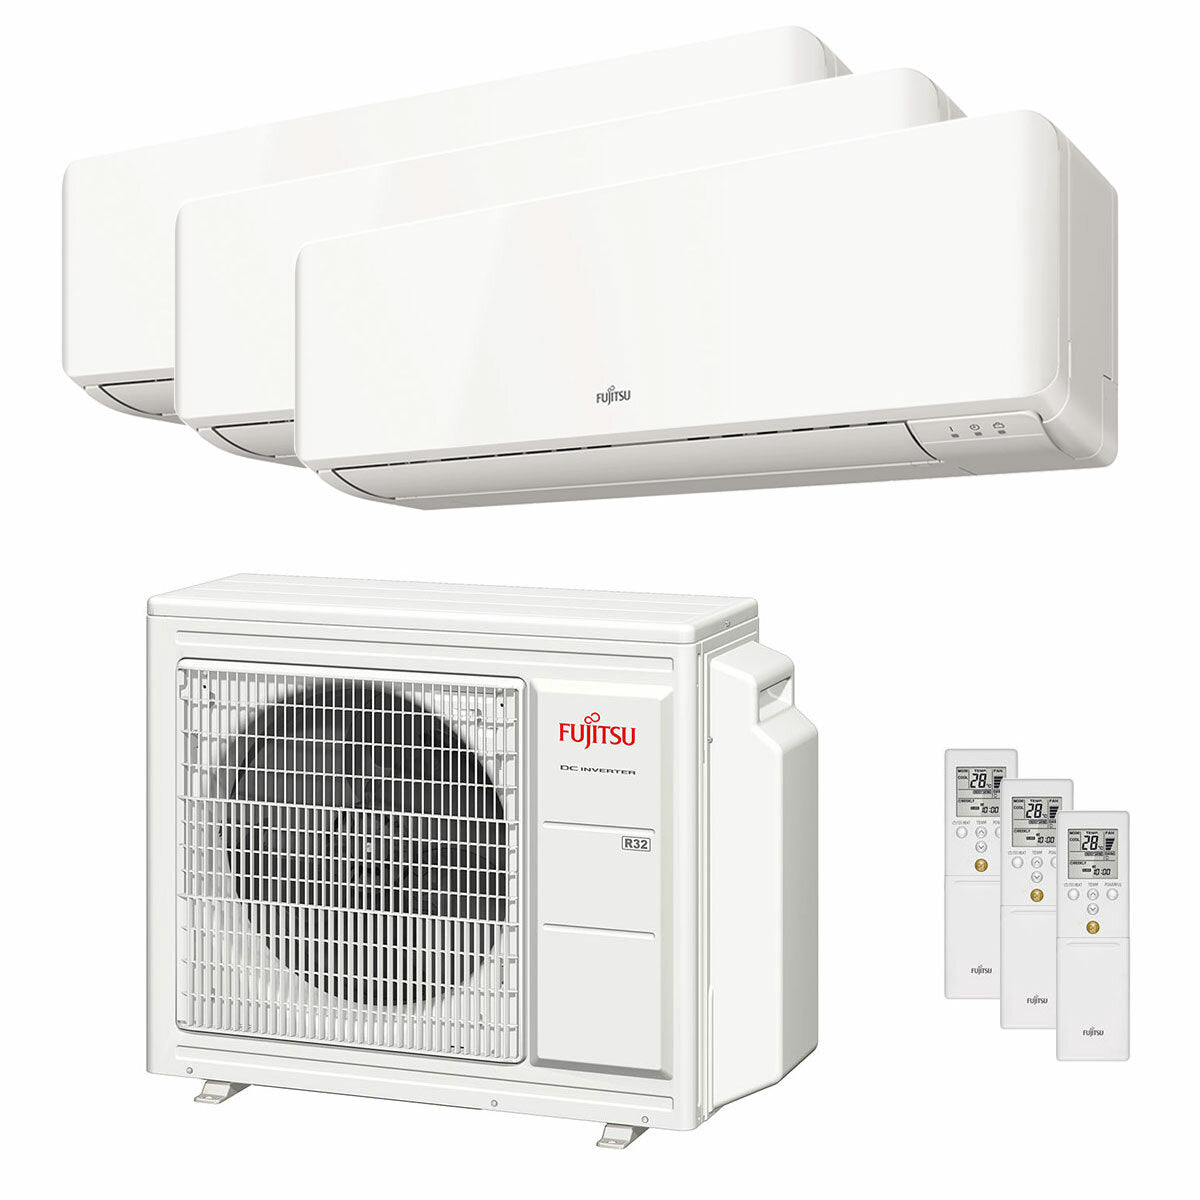 Fujitsu air conditioner KM WiFi Series trial split 7000+7000+7000 BTU inverter A+++ external unit 5.4 kW